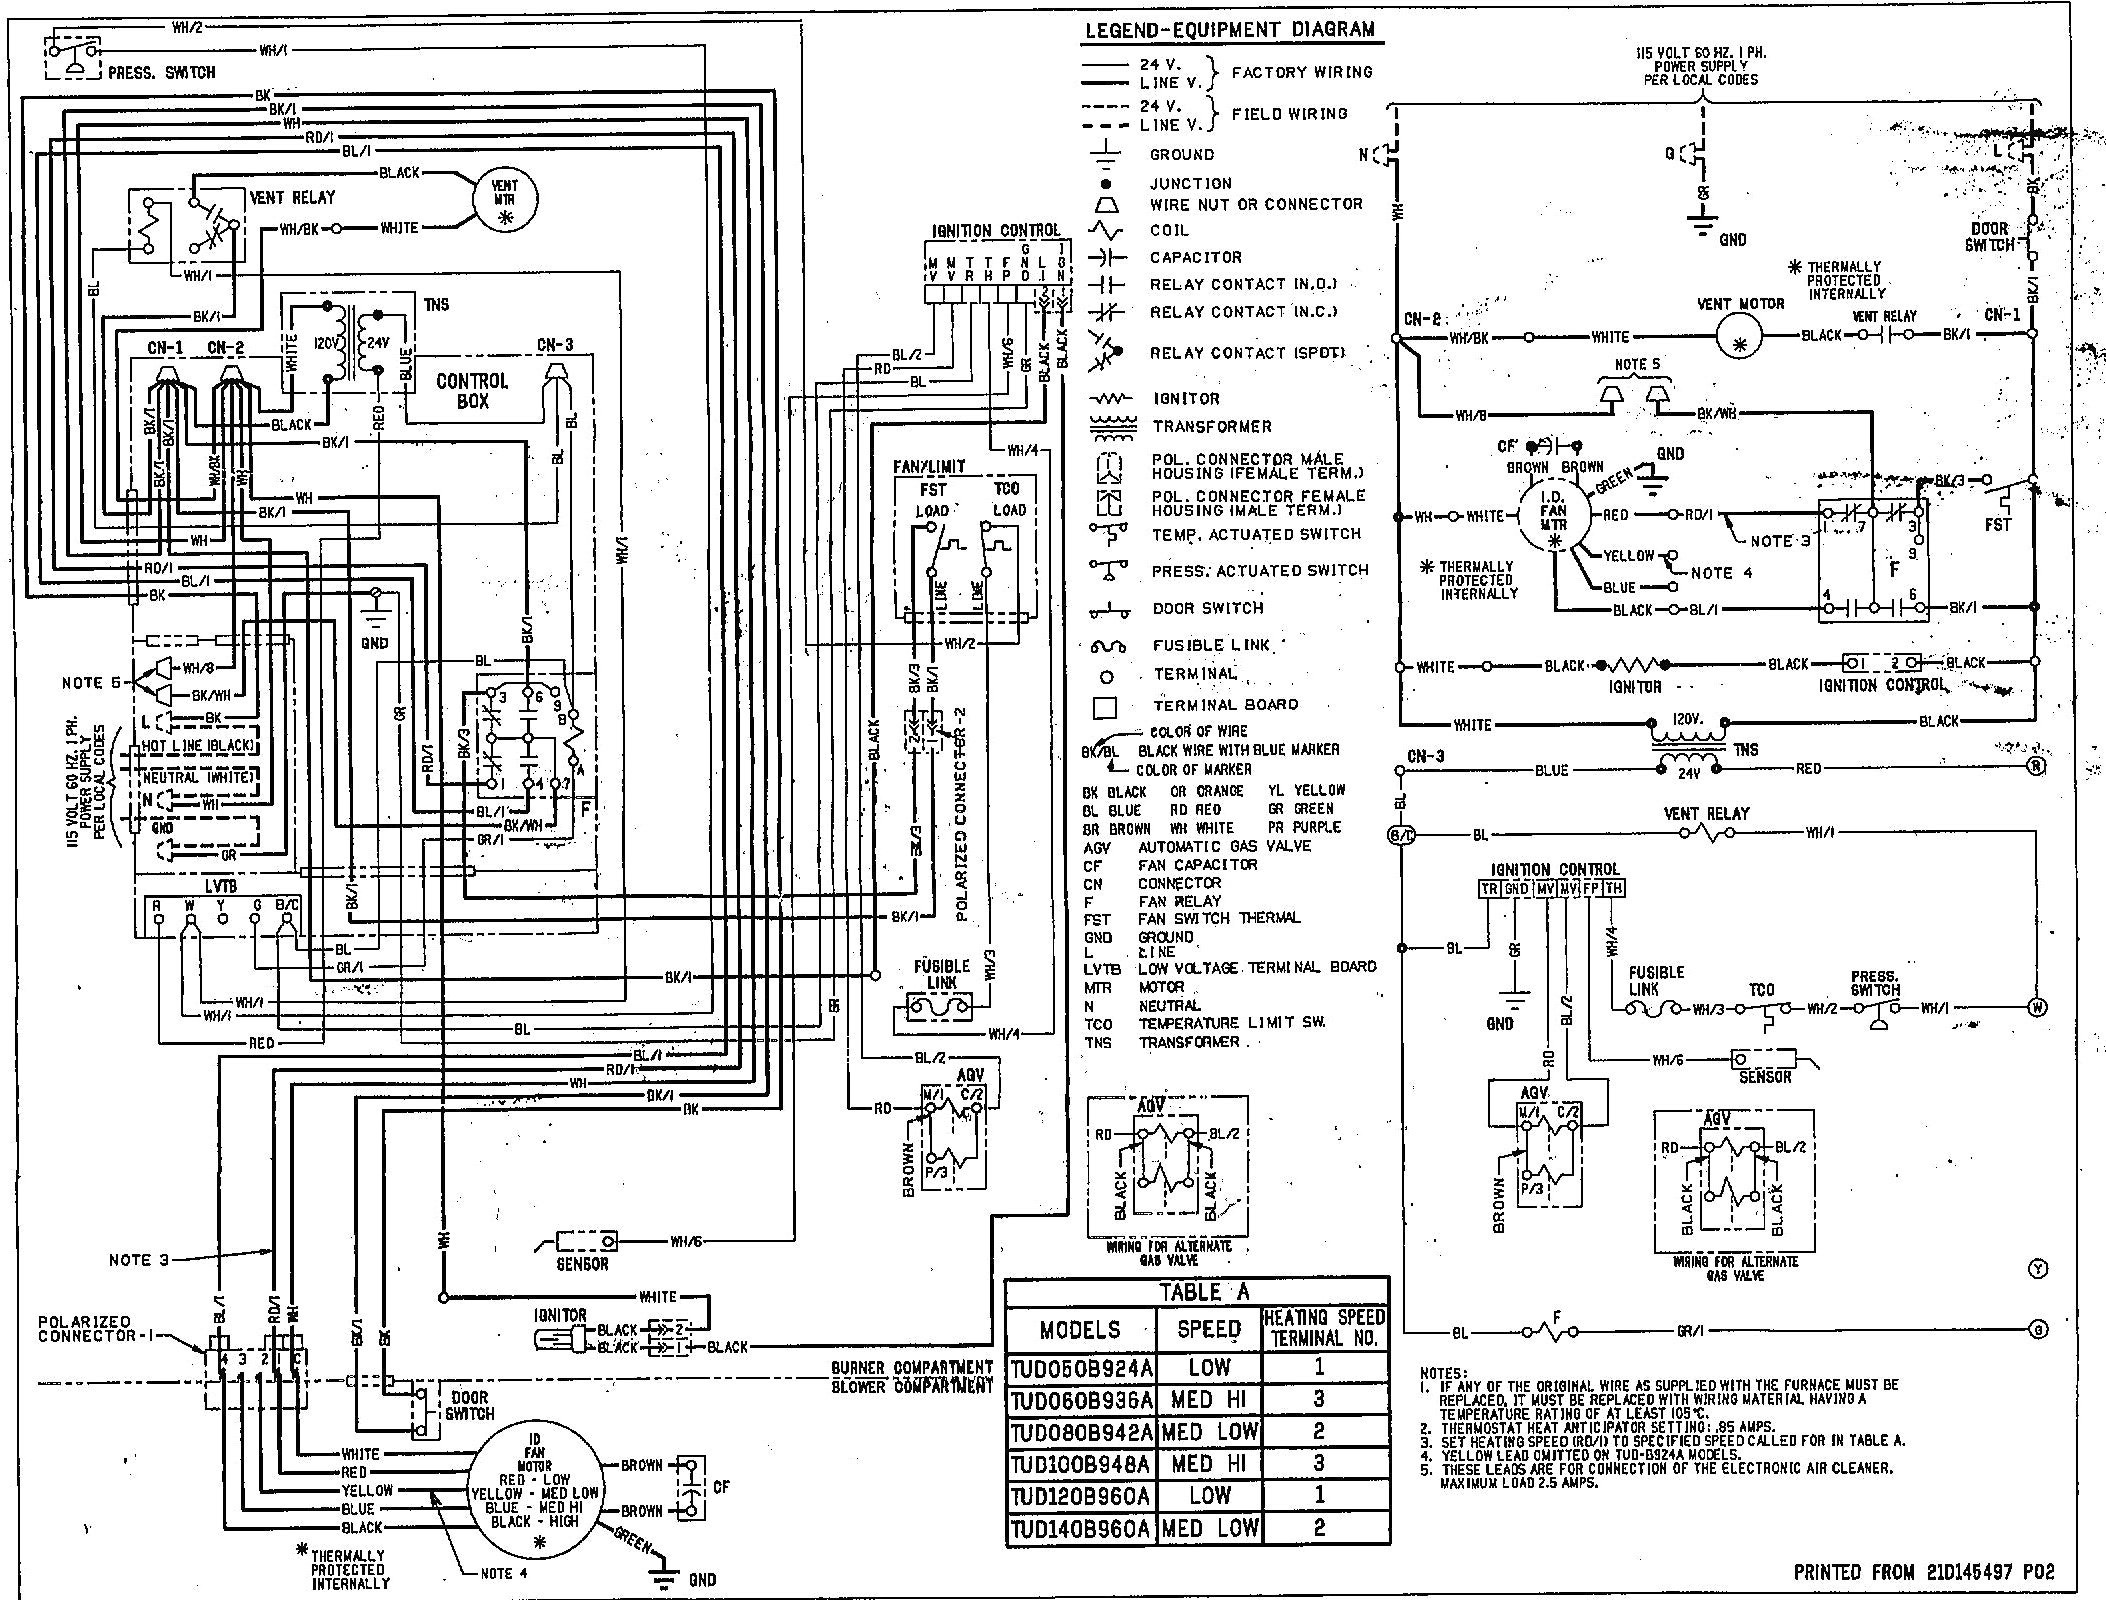 fresh trane weathertron thermostat wiring diagram of trane thermostat wiring diagram